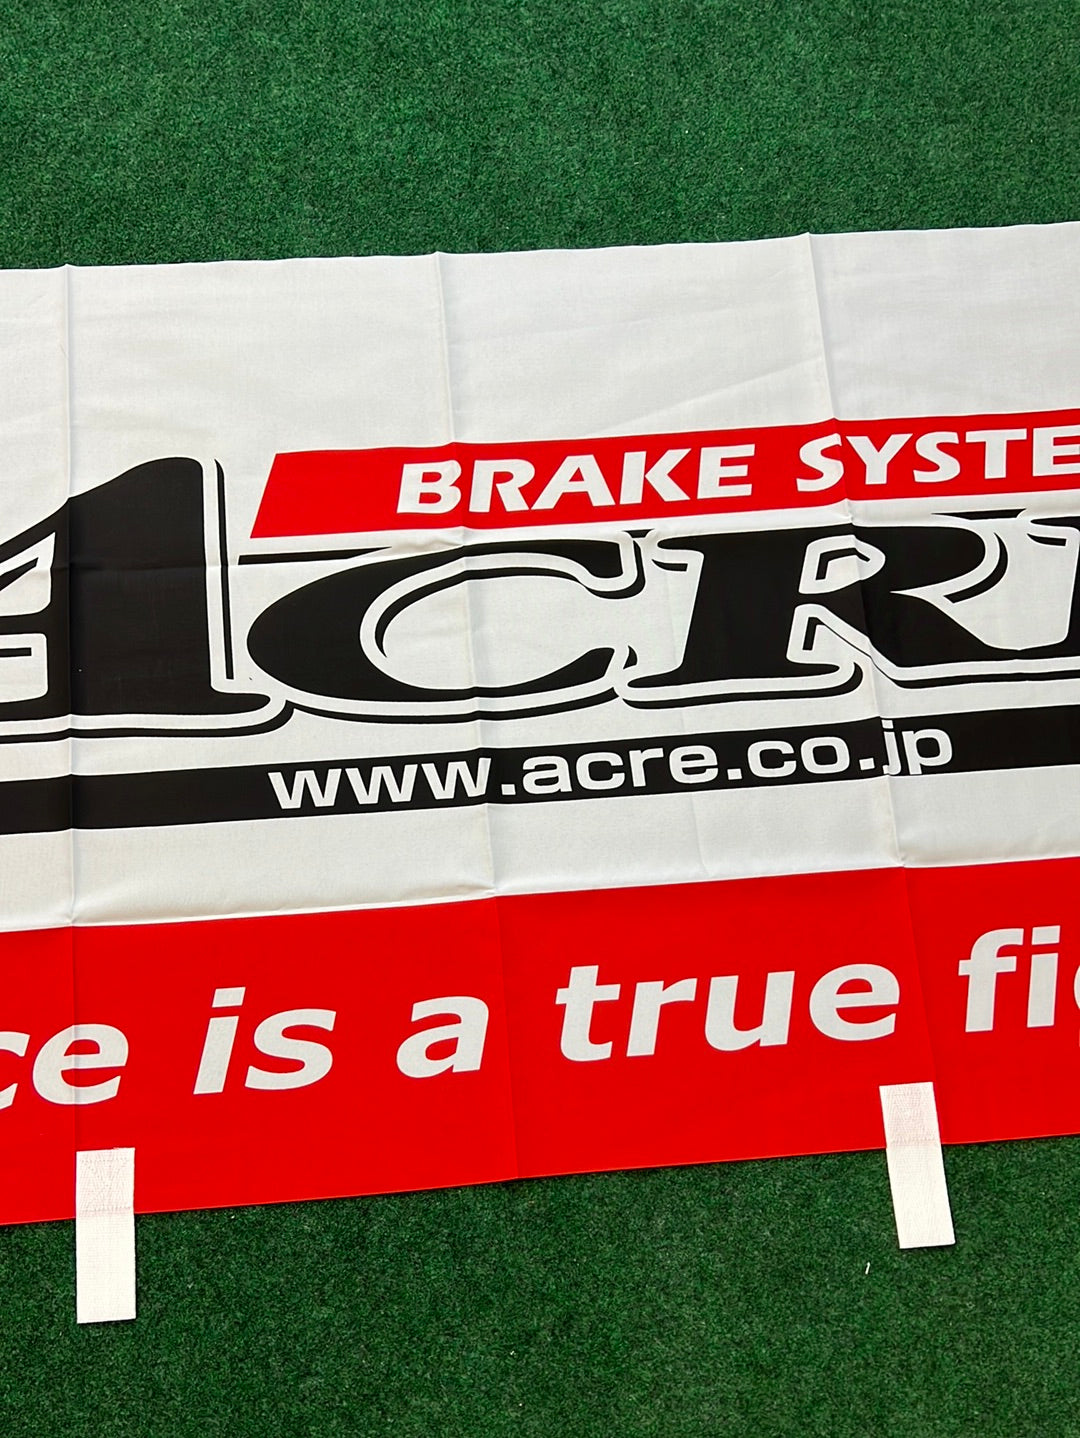 BRAKE SYSTEMS db ACRE Nobori Banner